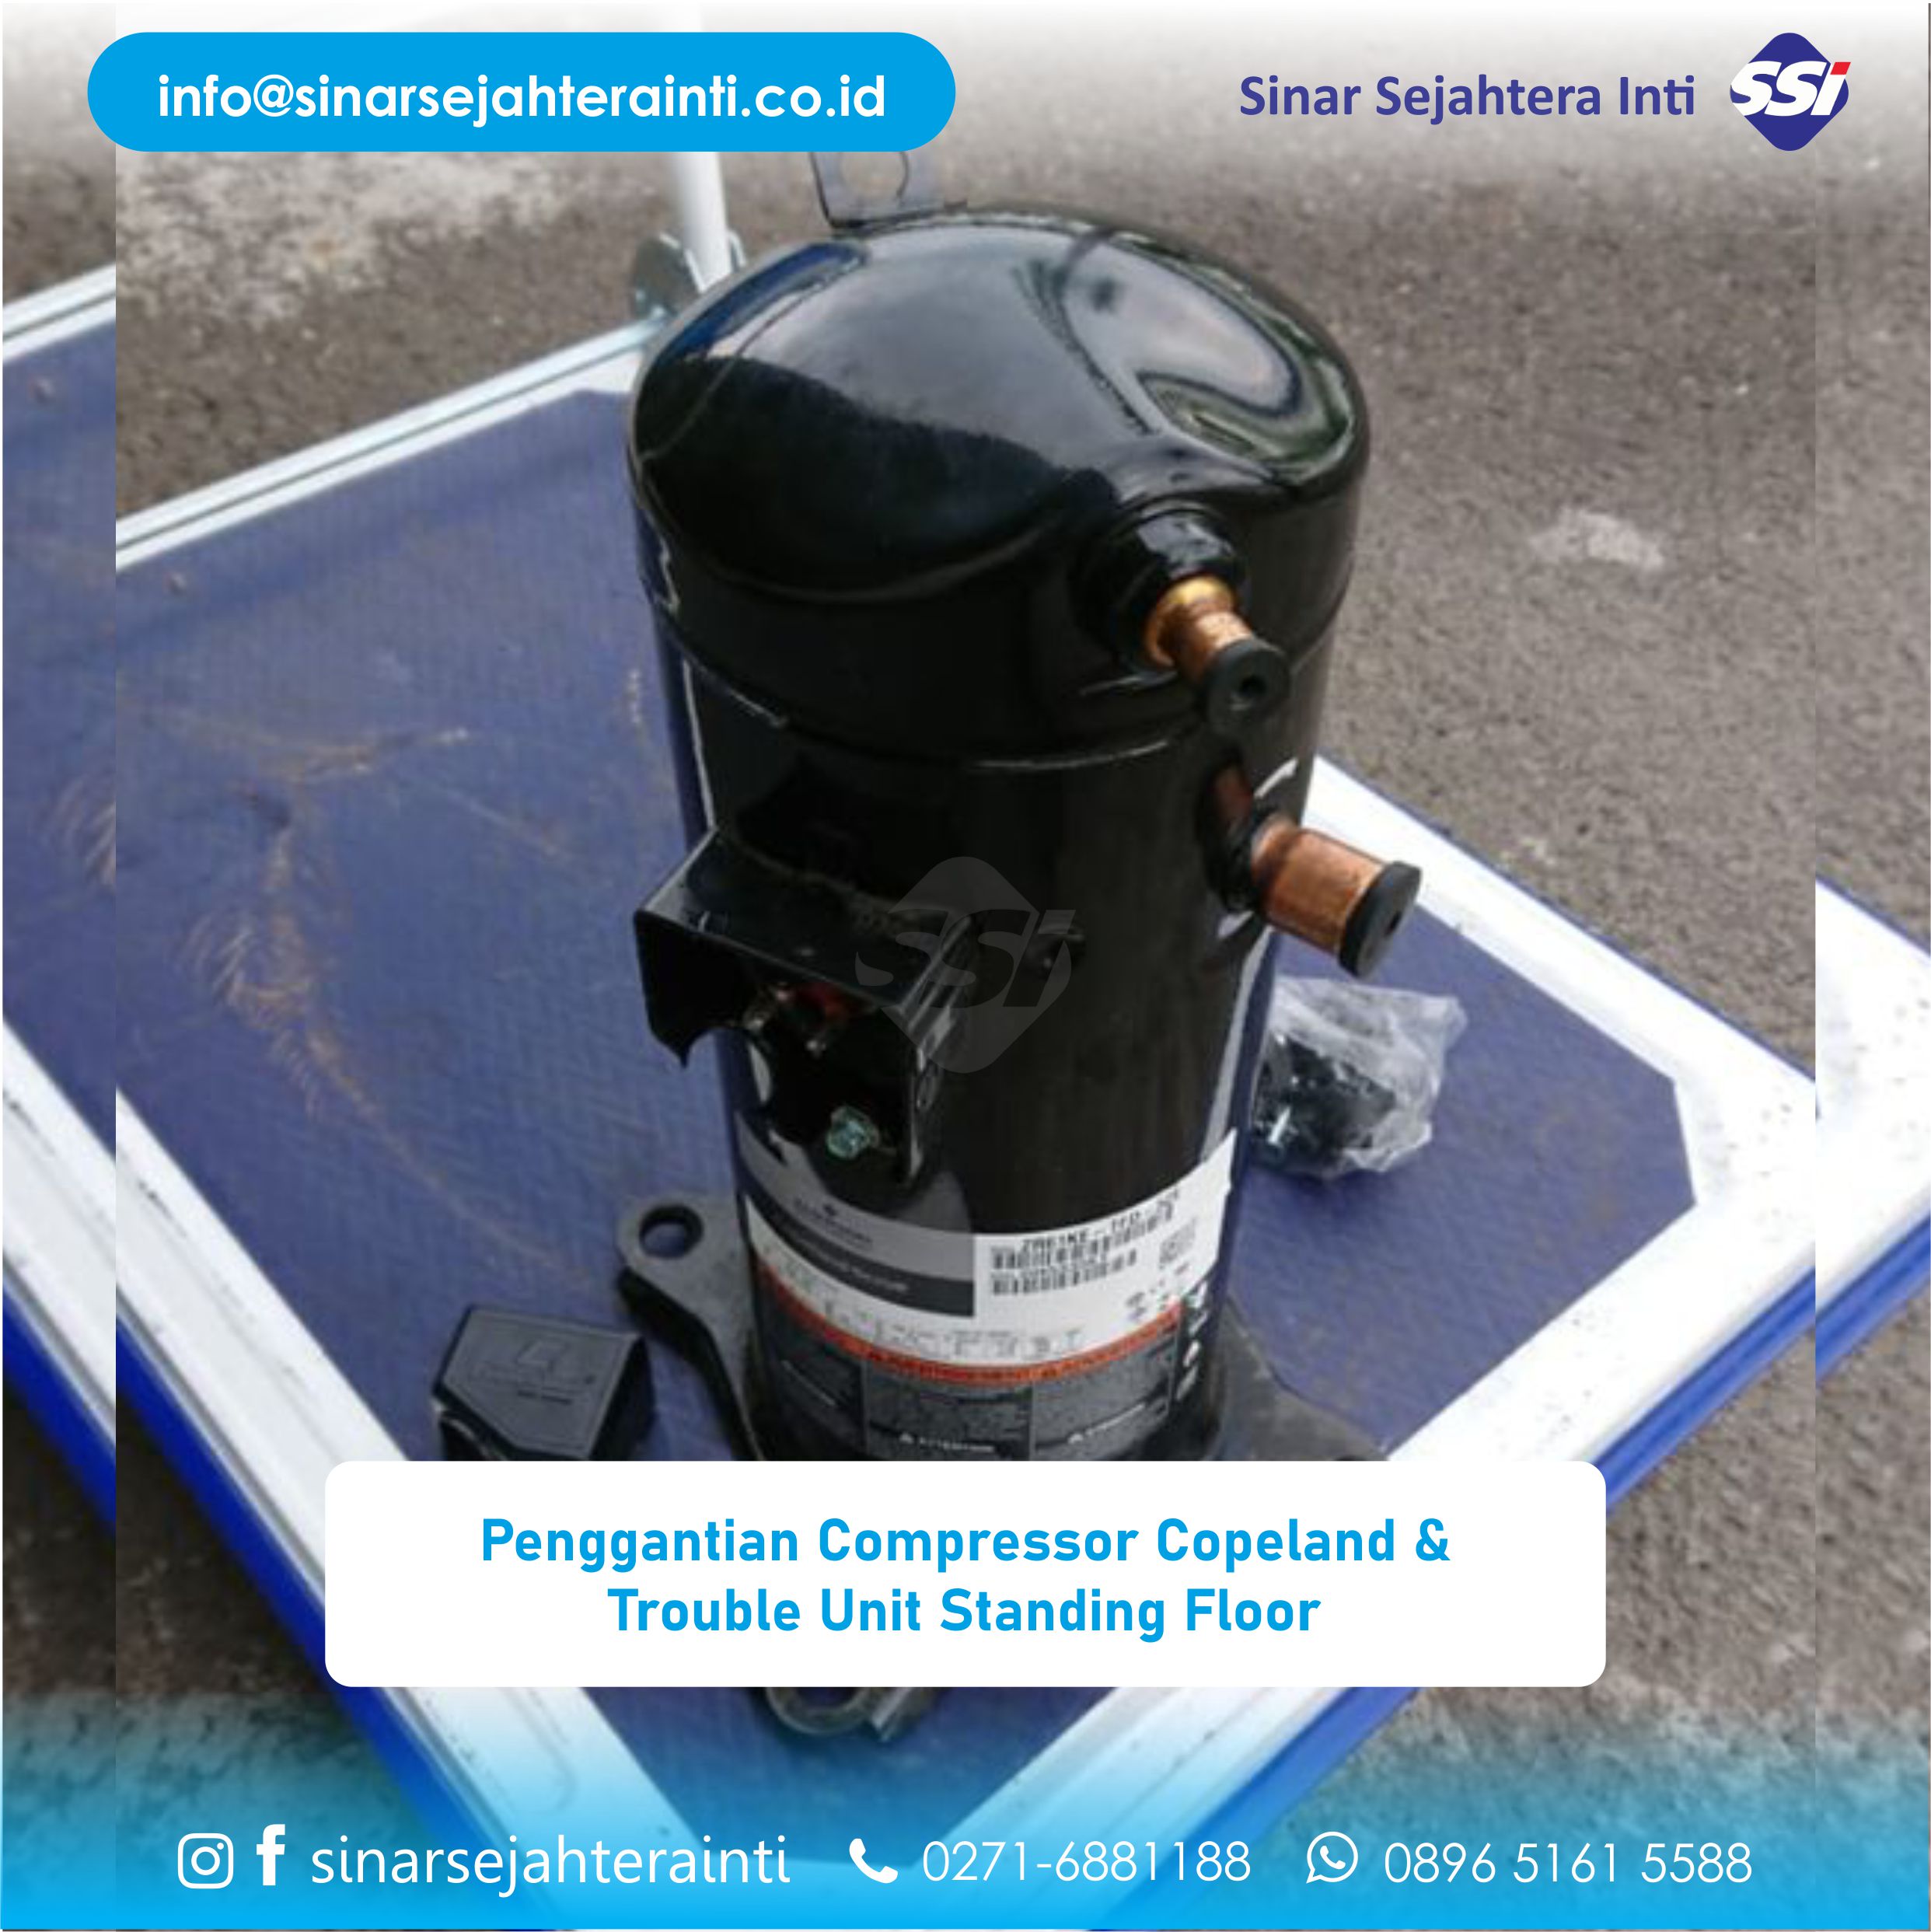 Compressor Copeland & Trouble Unit Standing Floor